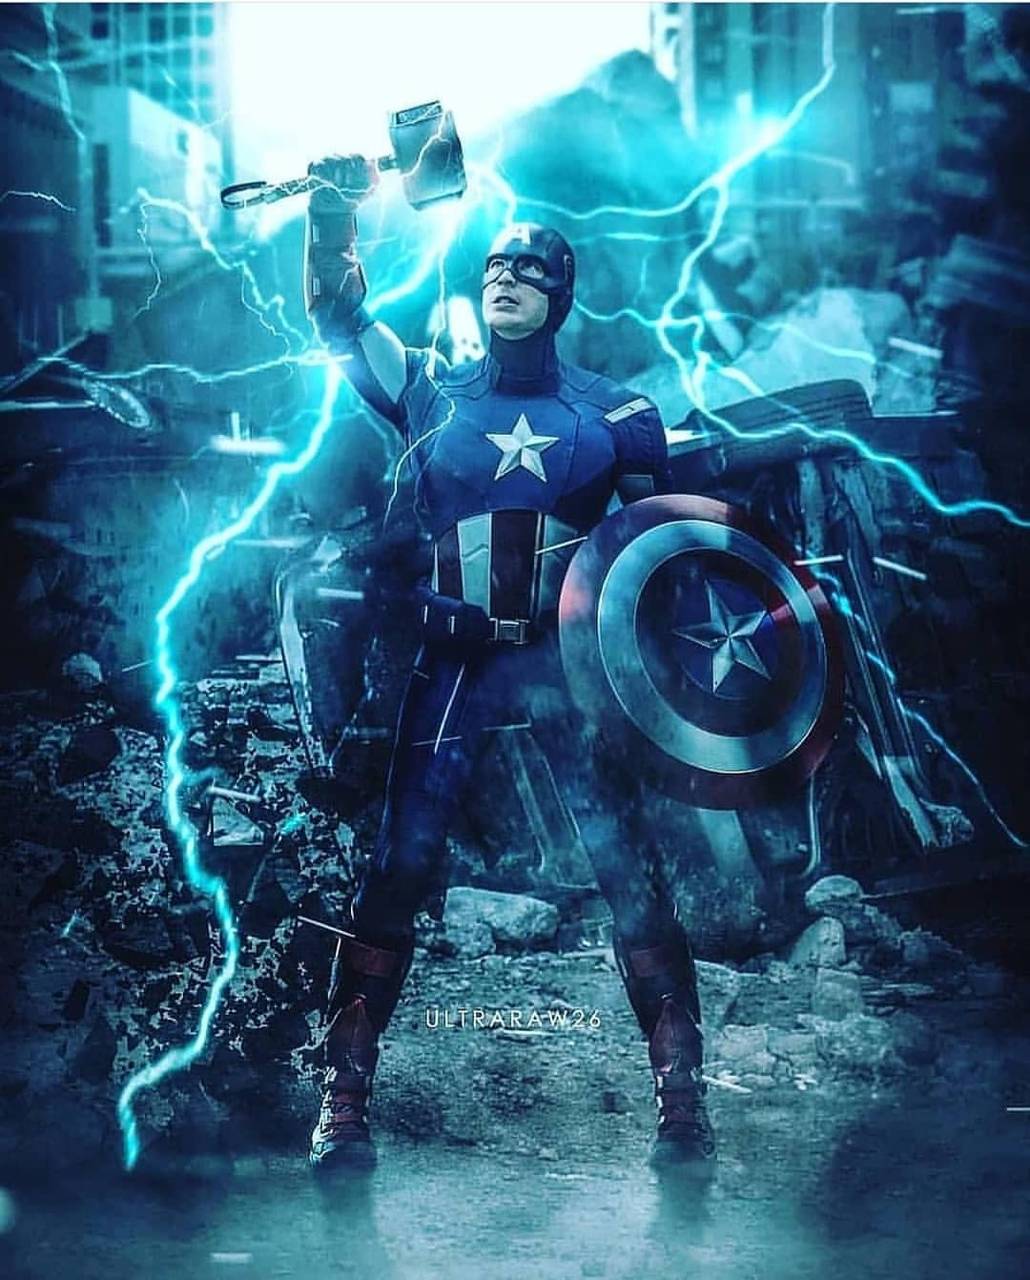 Captain America wallpaper